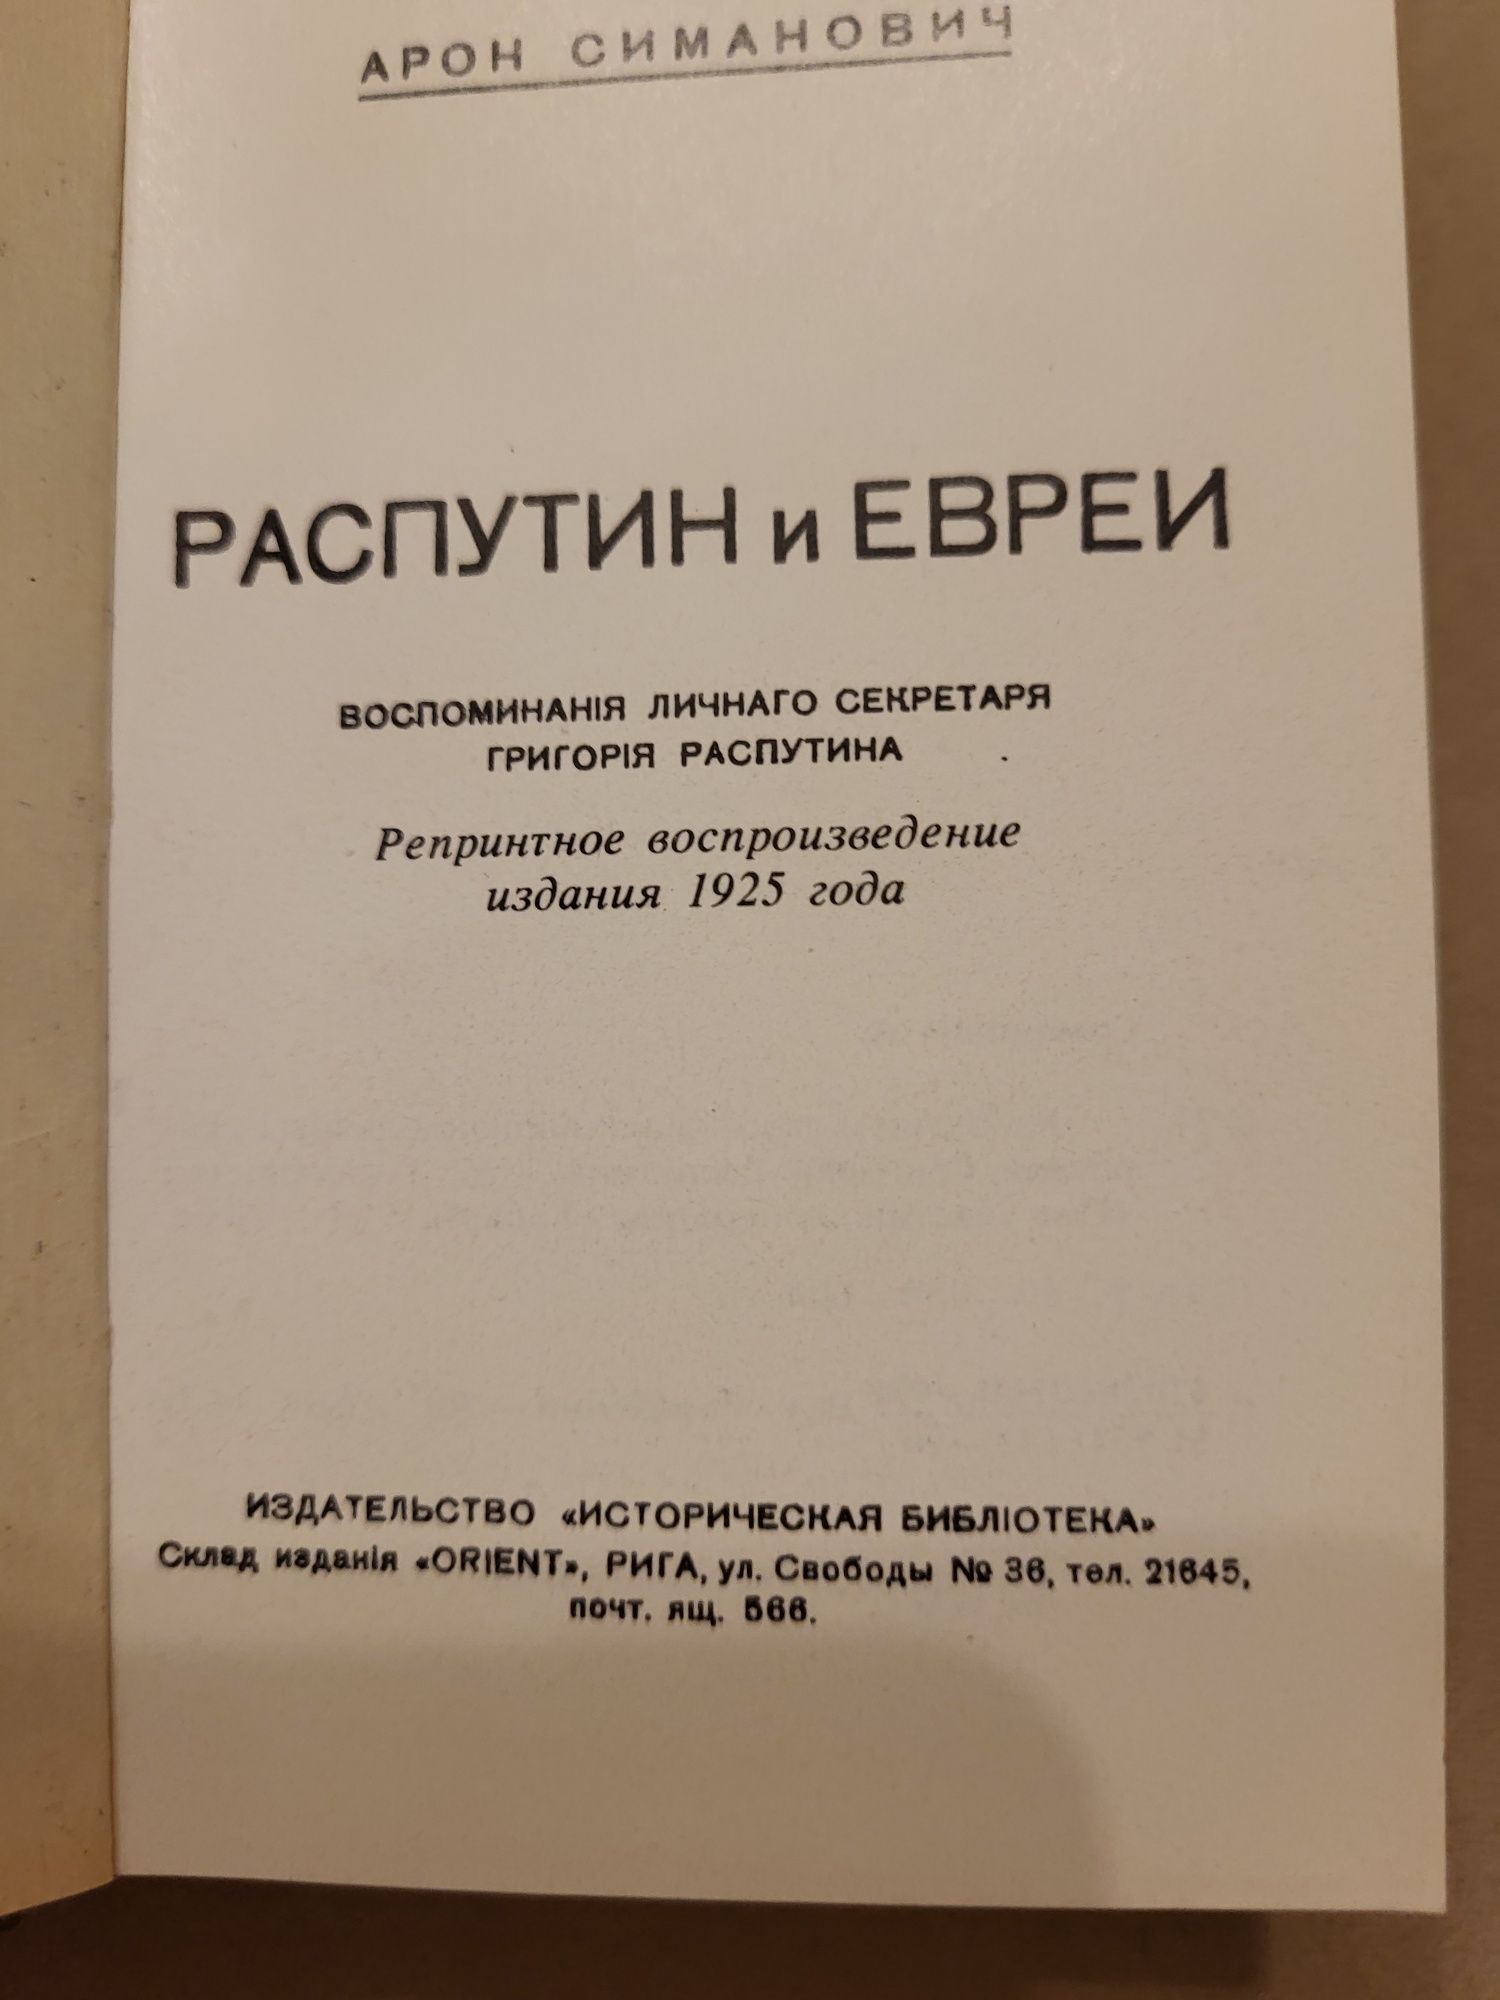 Книга  А. Симанович  "Распутин и евреи "